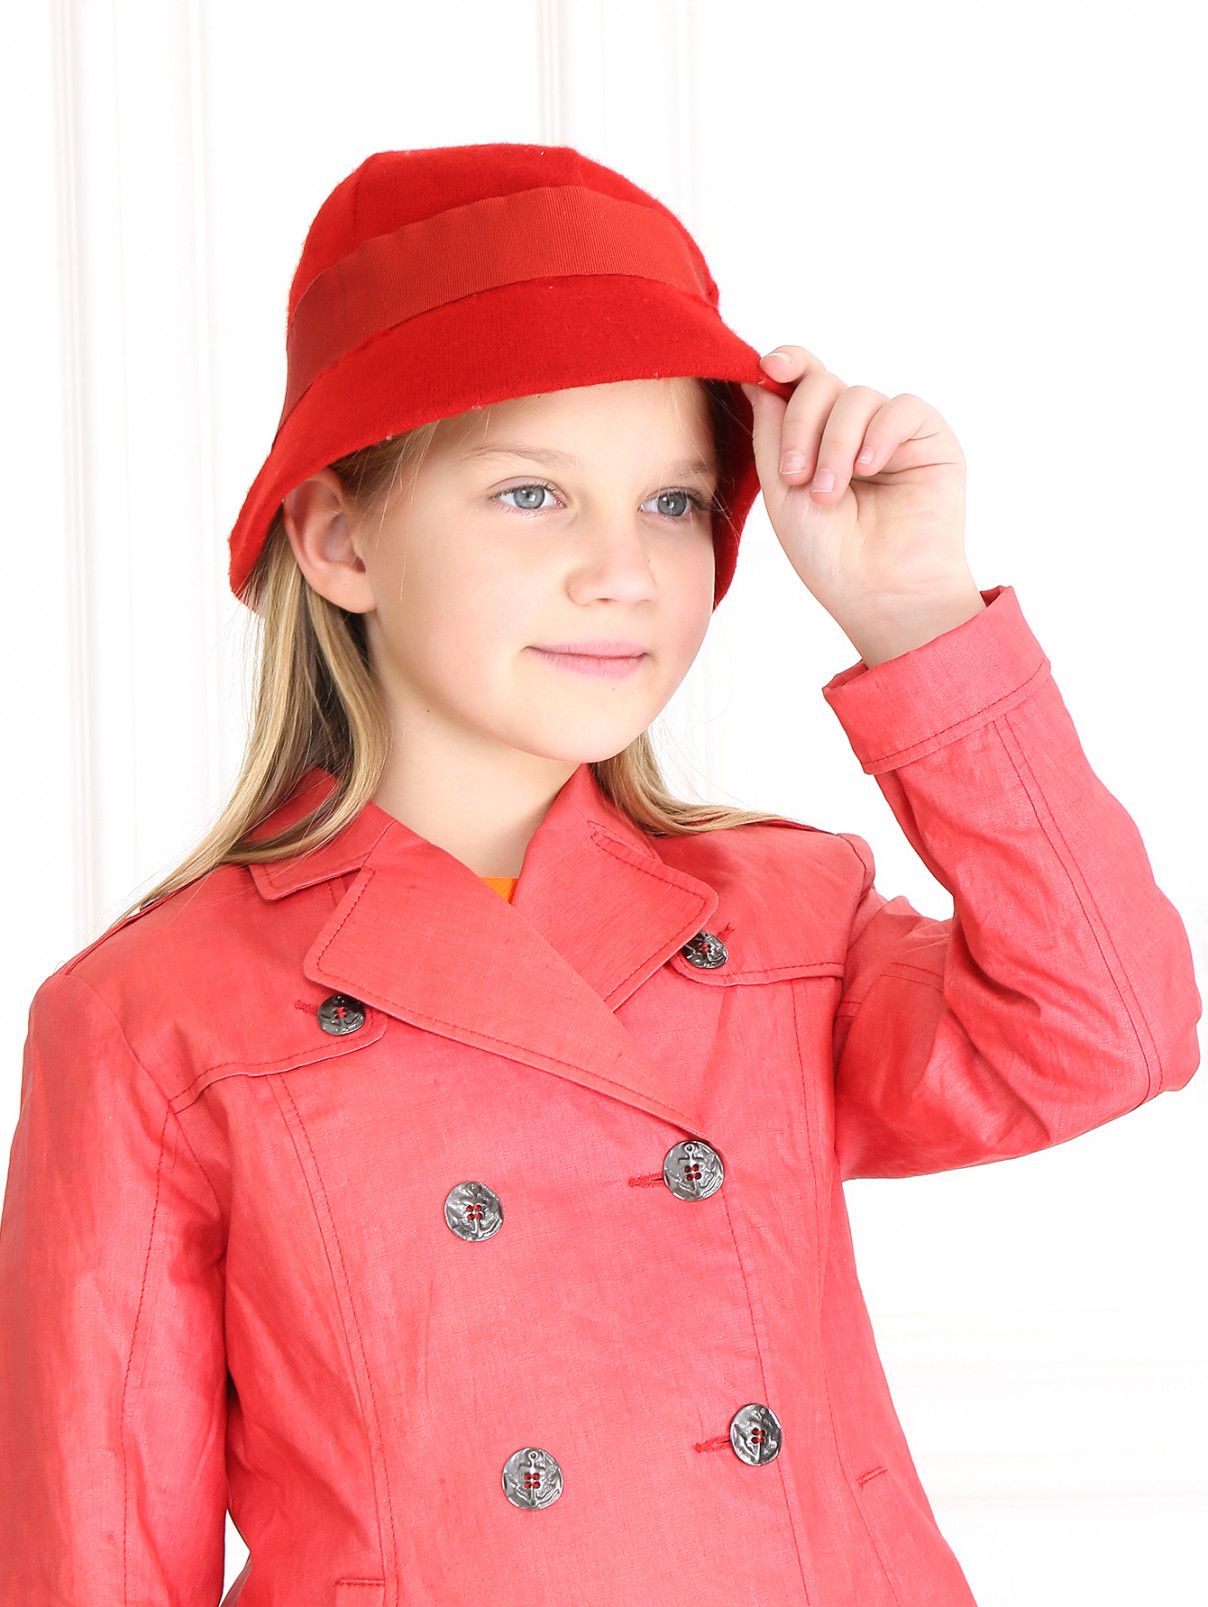 Шляпа-клош с декором Lesy by Lisetta Cosi  –  Модель Общий вид  – Цвет:  Красный